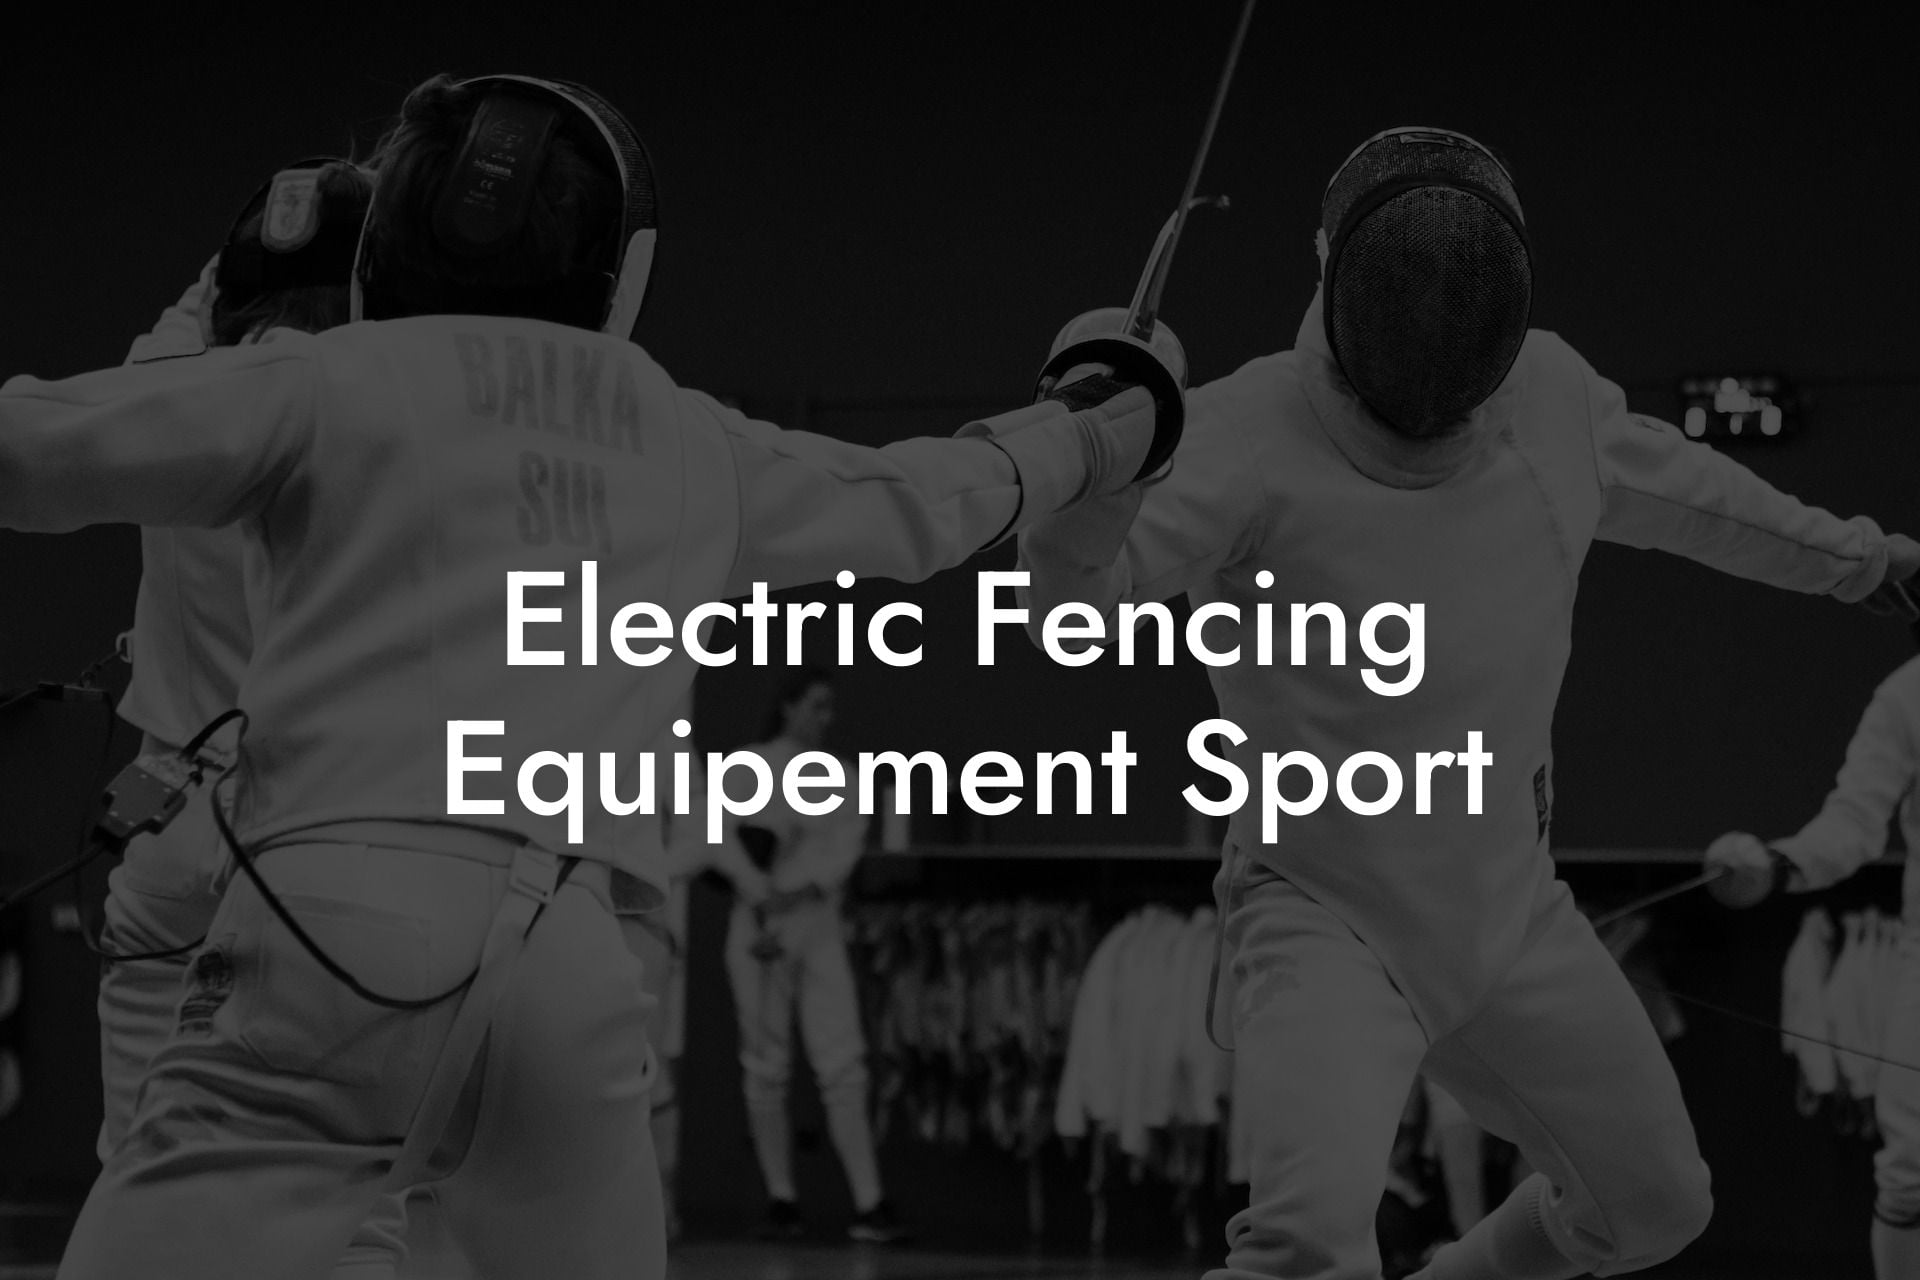 Electric Fencing Equipement Sport